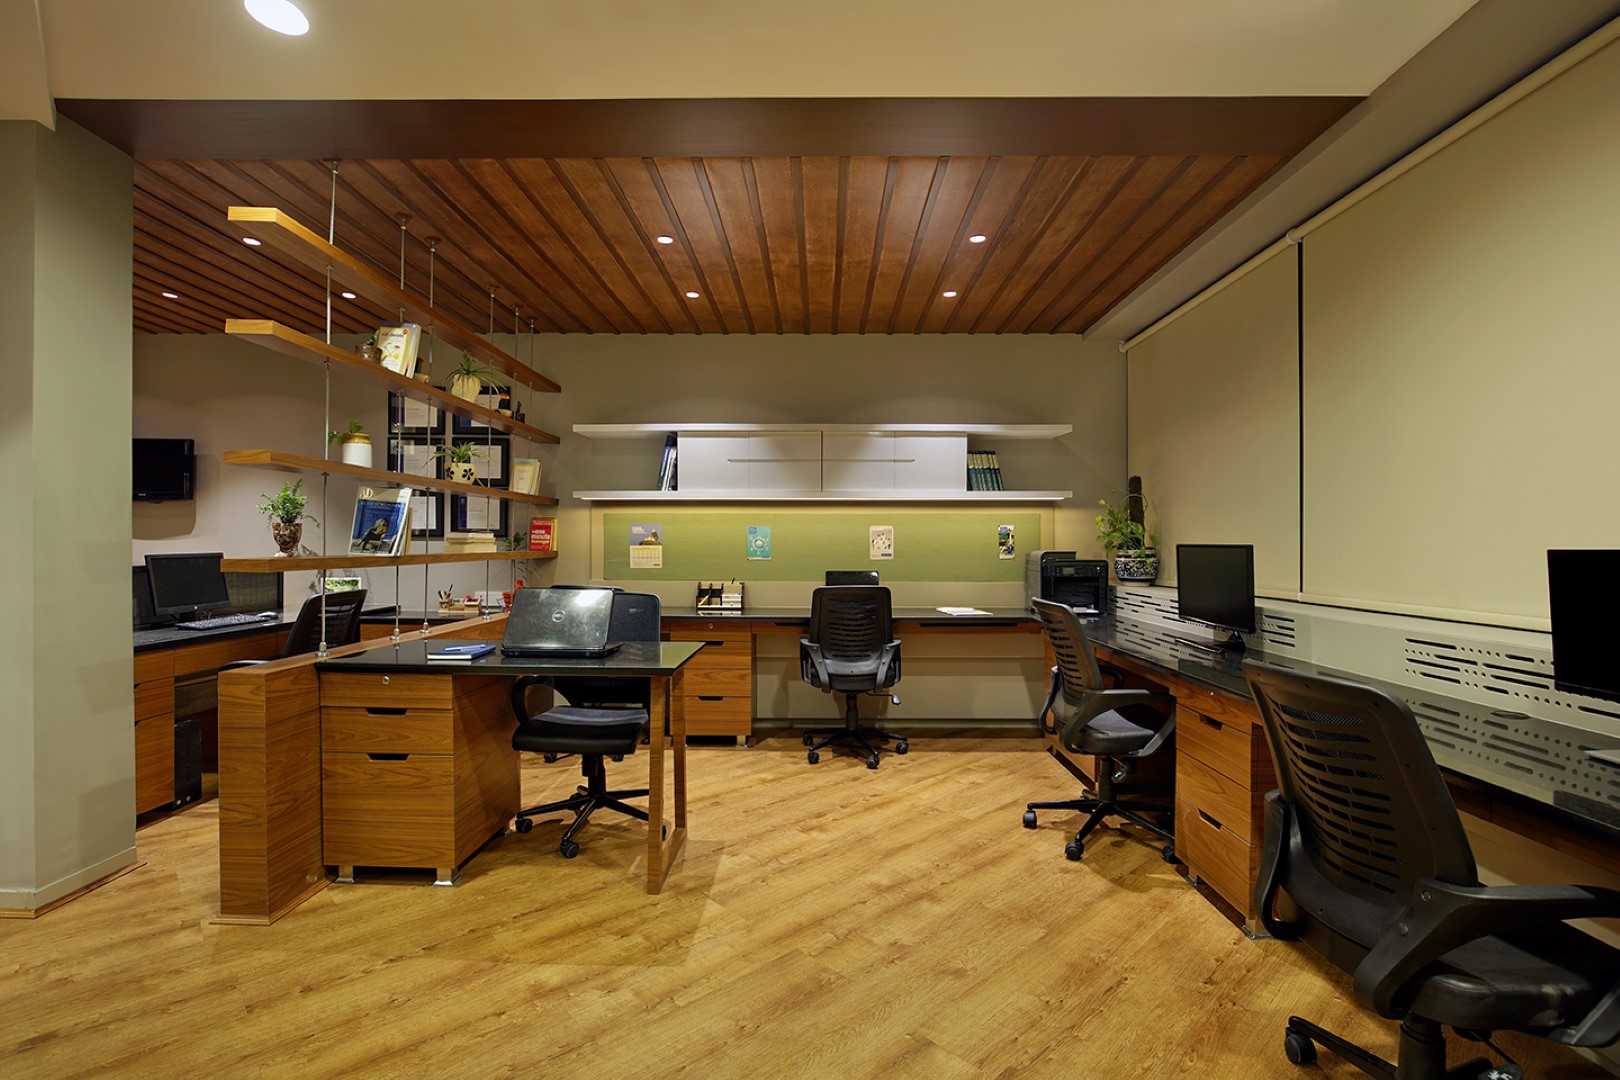 Corporate Office Interior Breaks the Monotony and Boring Environment | M S Design Studio - The ...